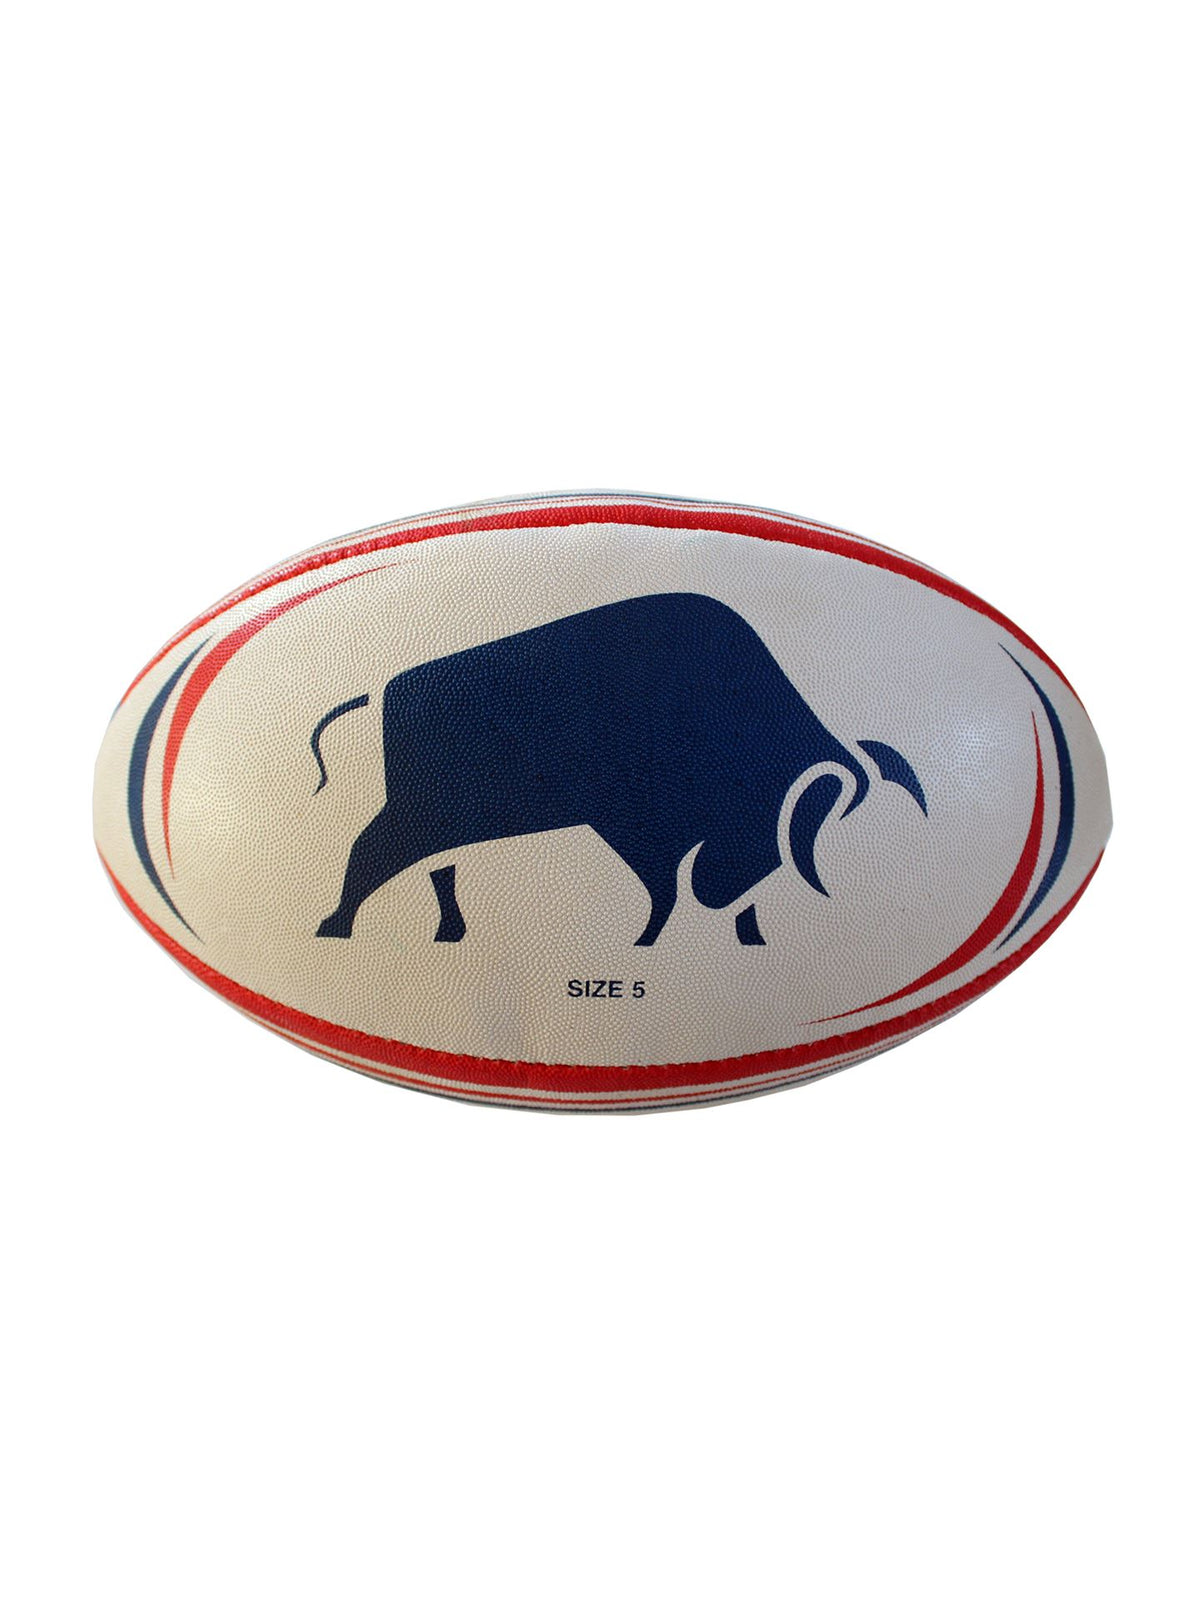 Raging Bull Rugby Ball - White